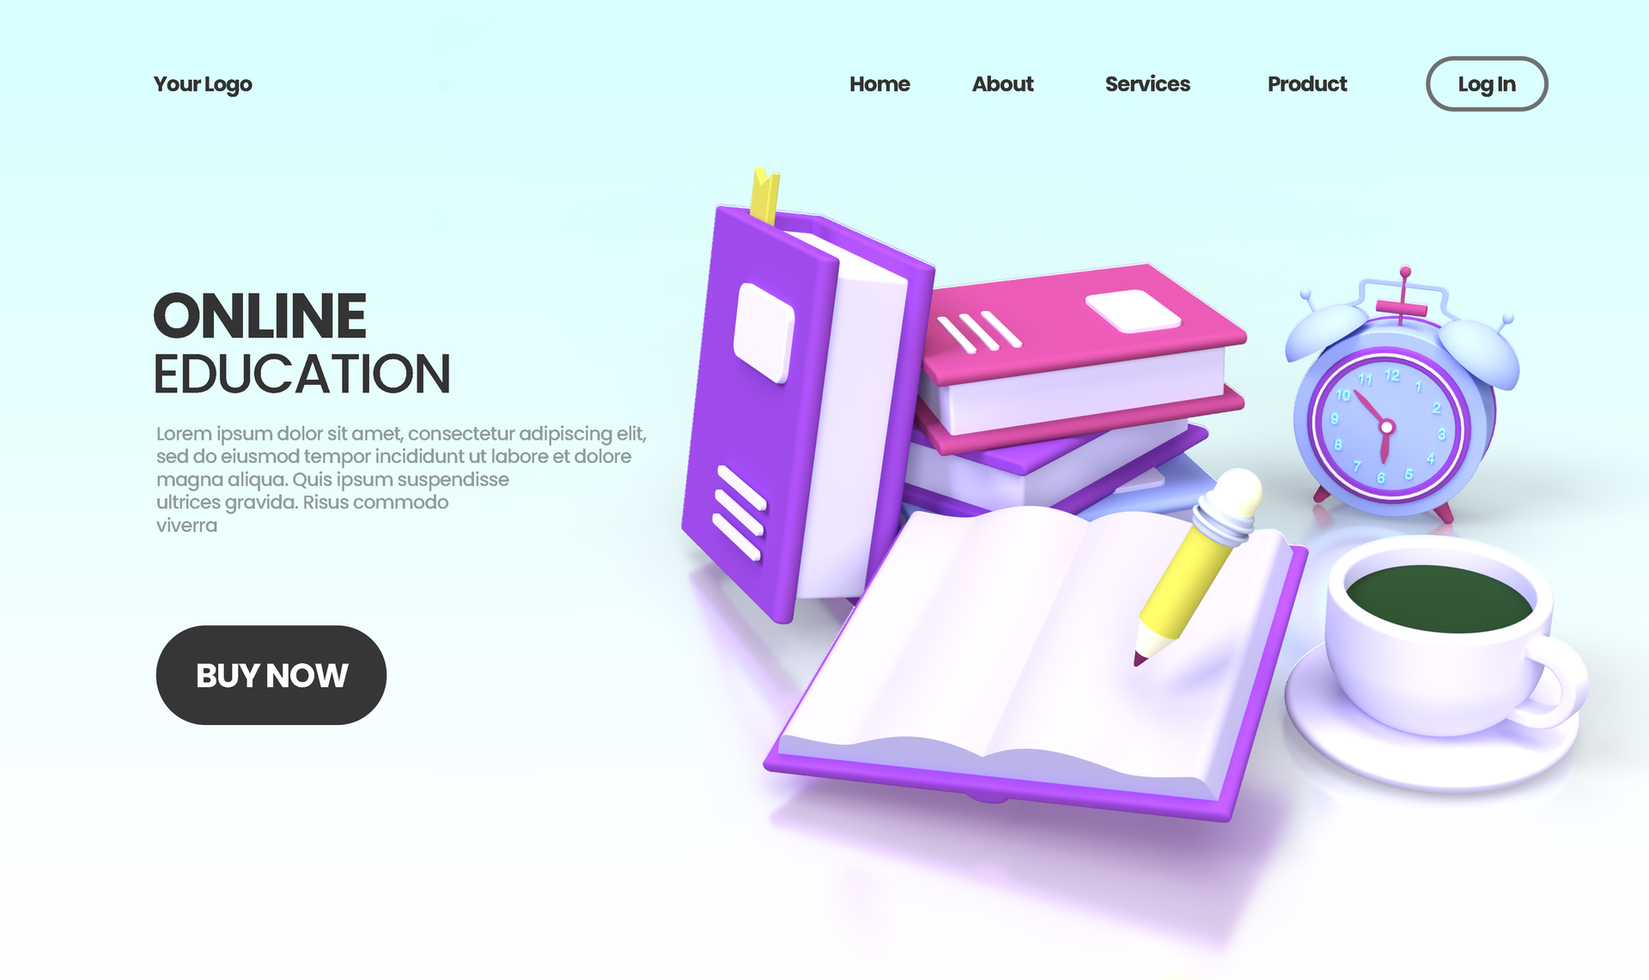 Online education concept illustration Landing page template for business idea concept background psd